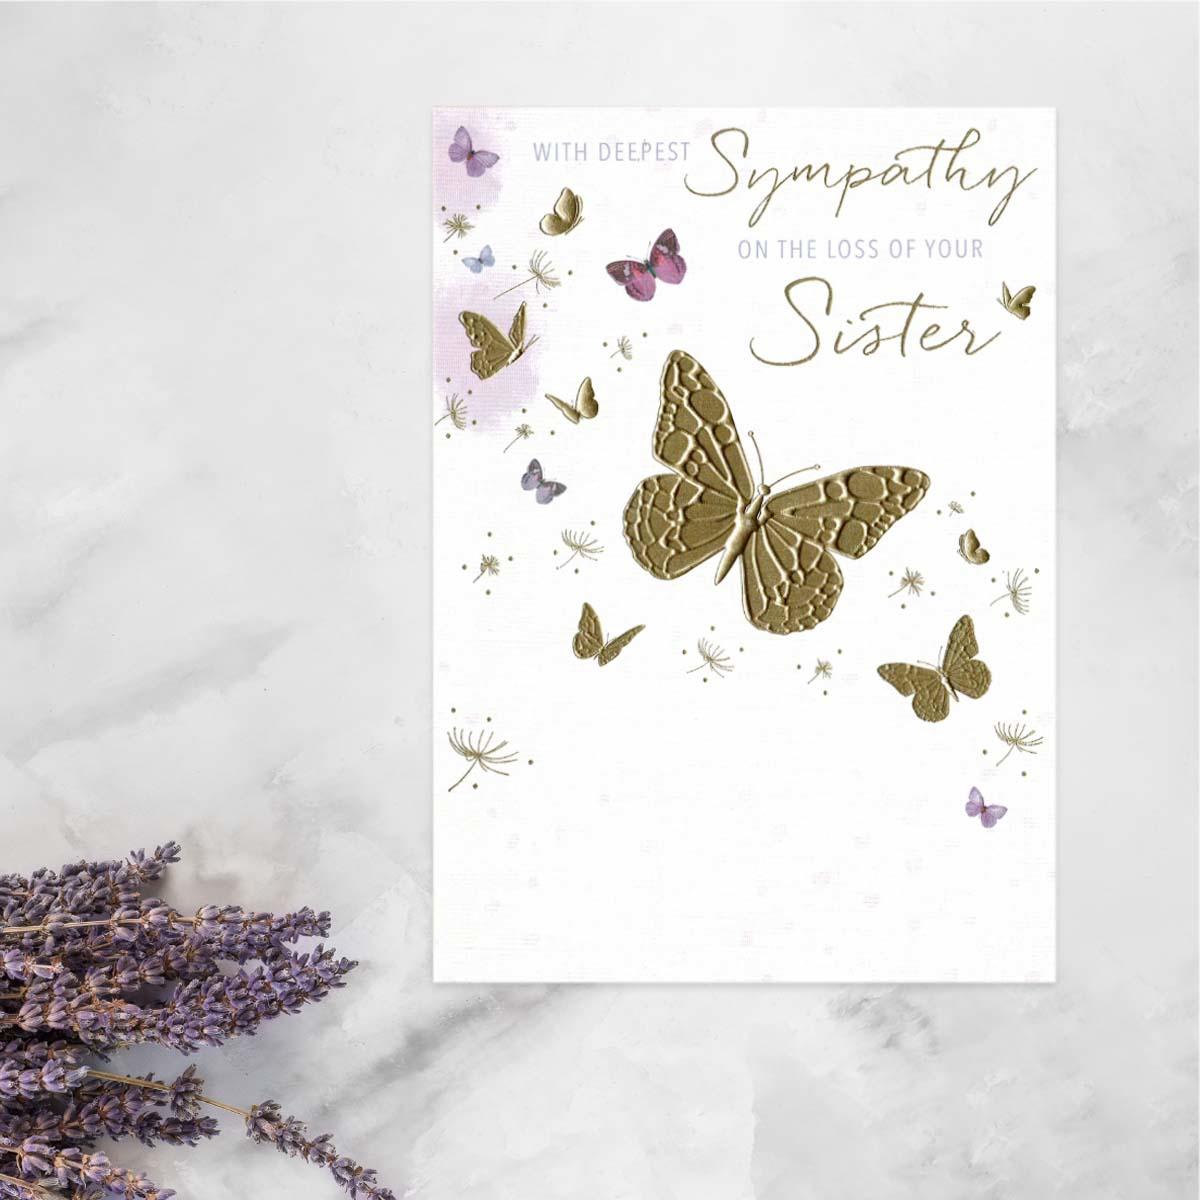 Loss Of Sister Sympathy Greeting Card Displayed In Full